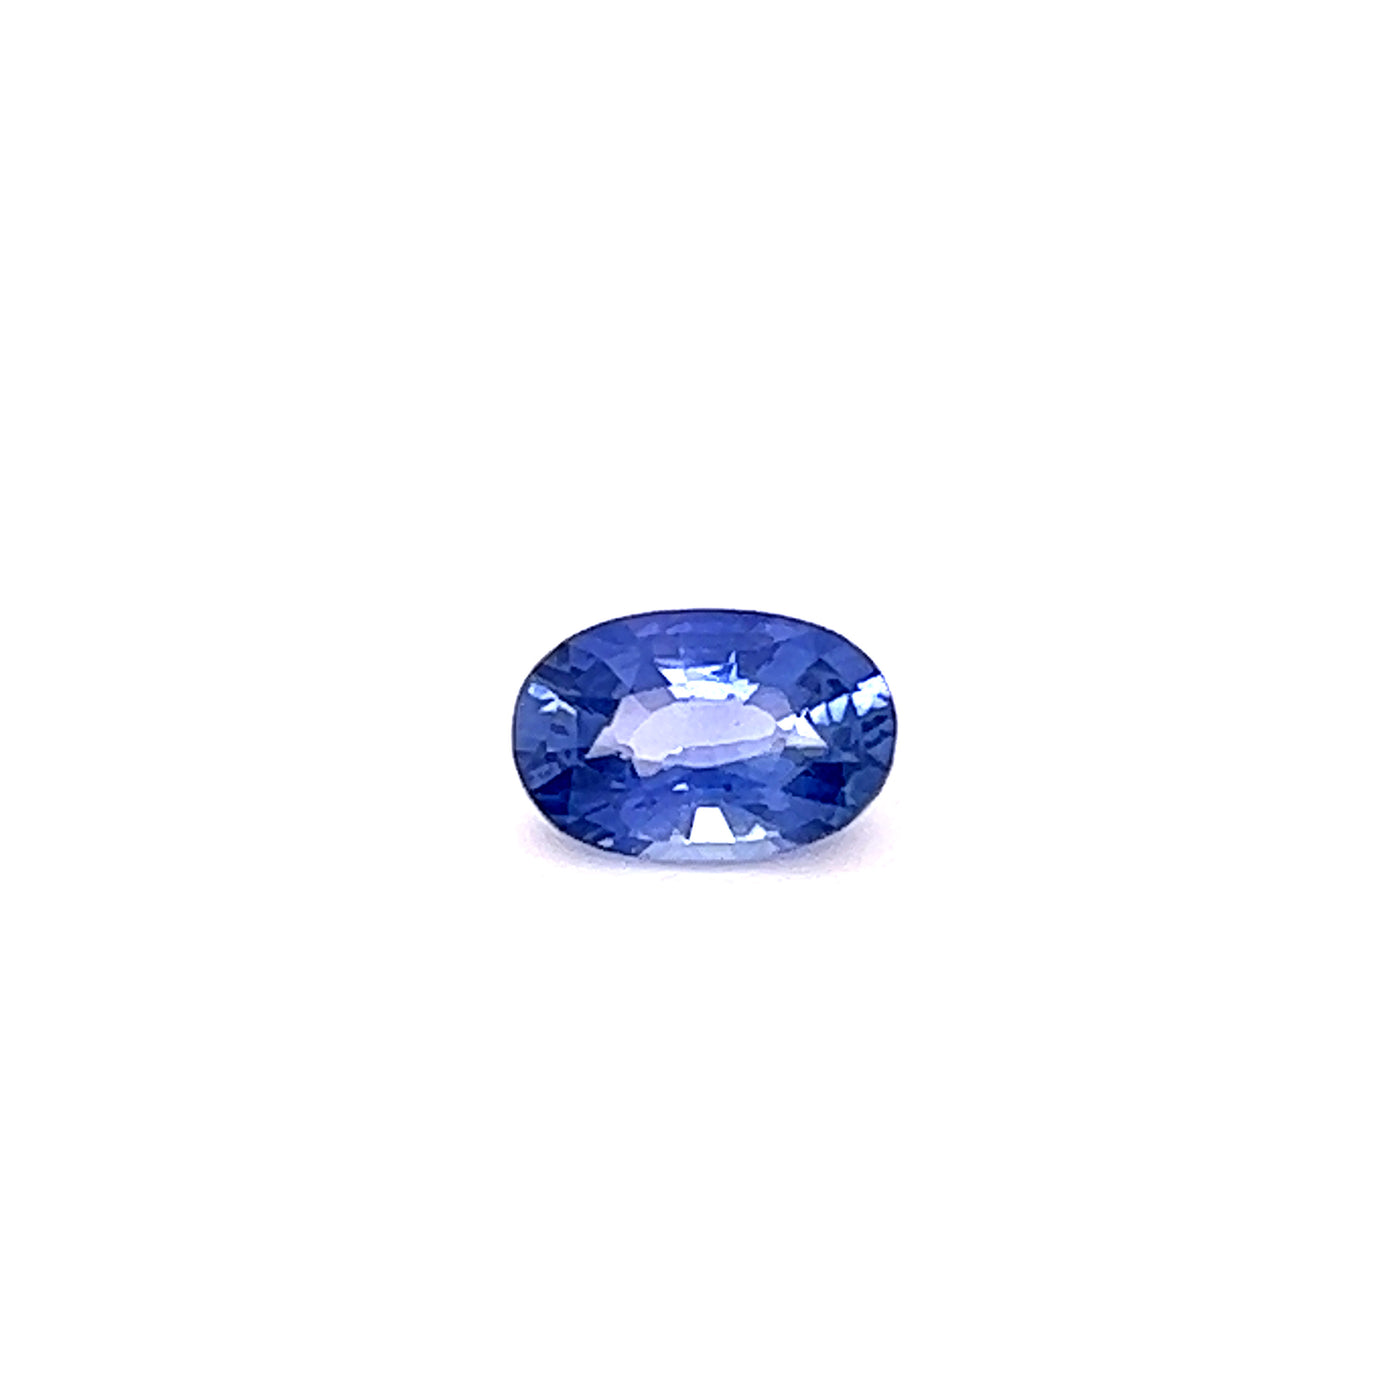 Saphir bleu 1.25 carats ovale non chauffé